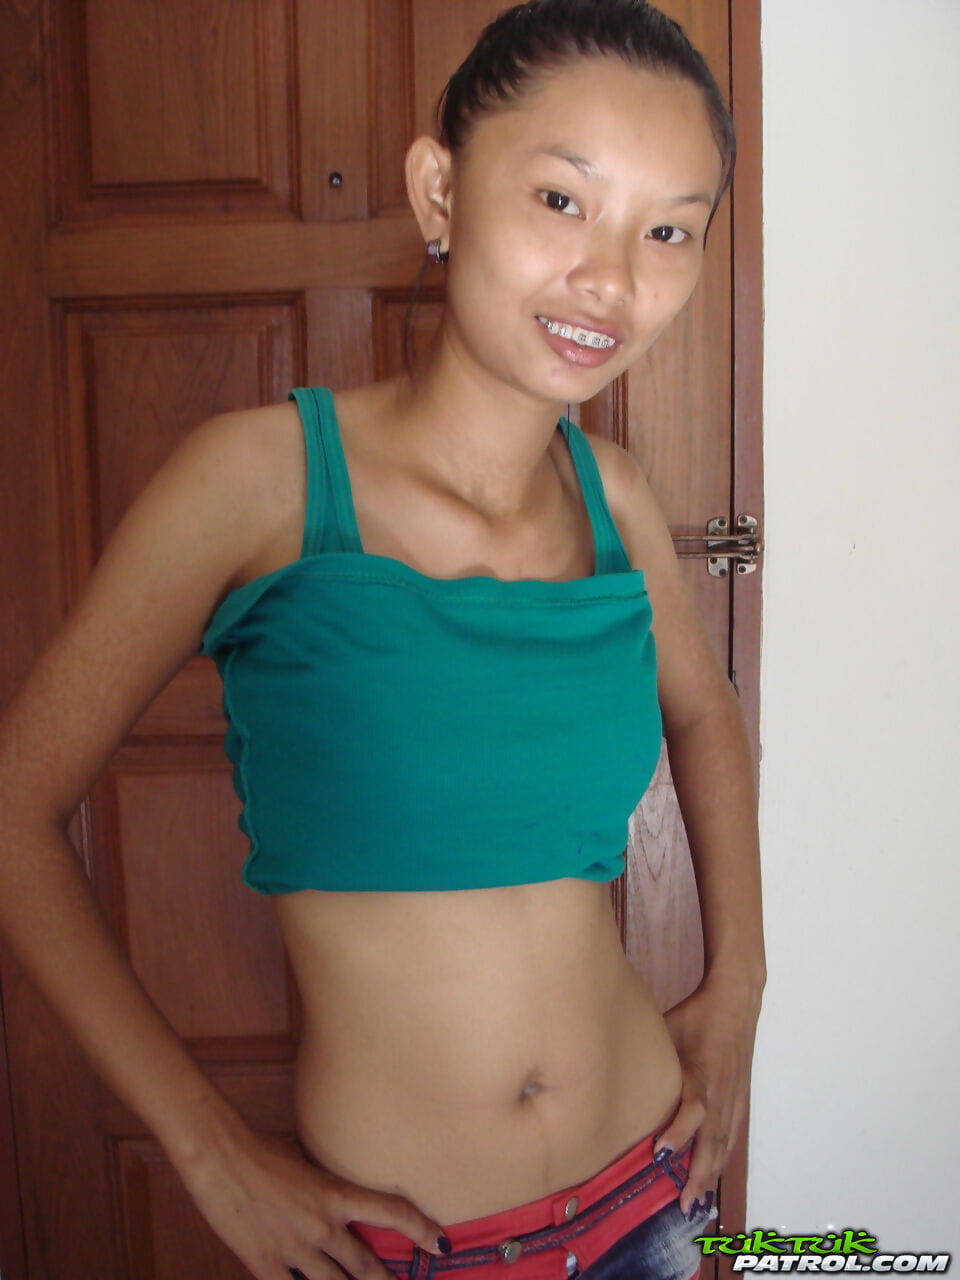 all thai girls nude free pics